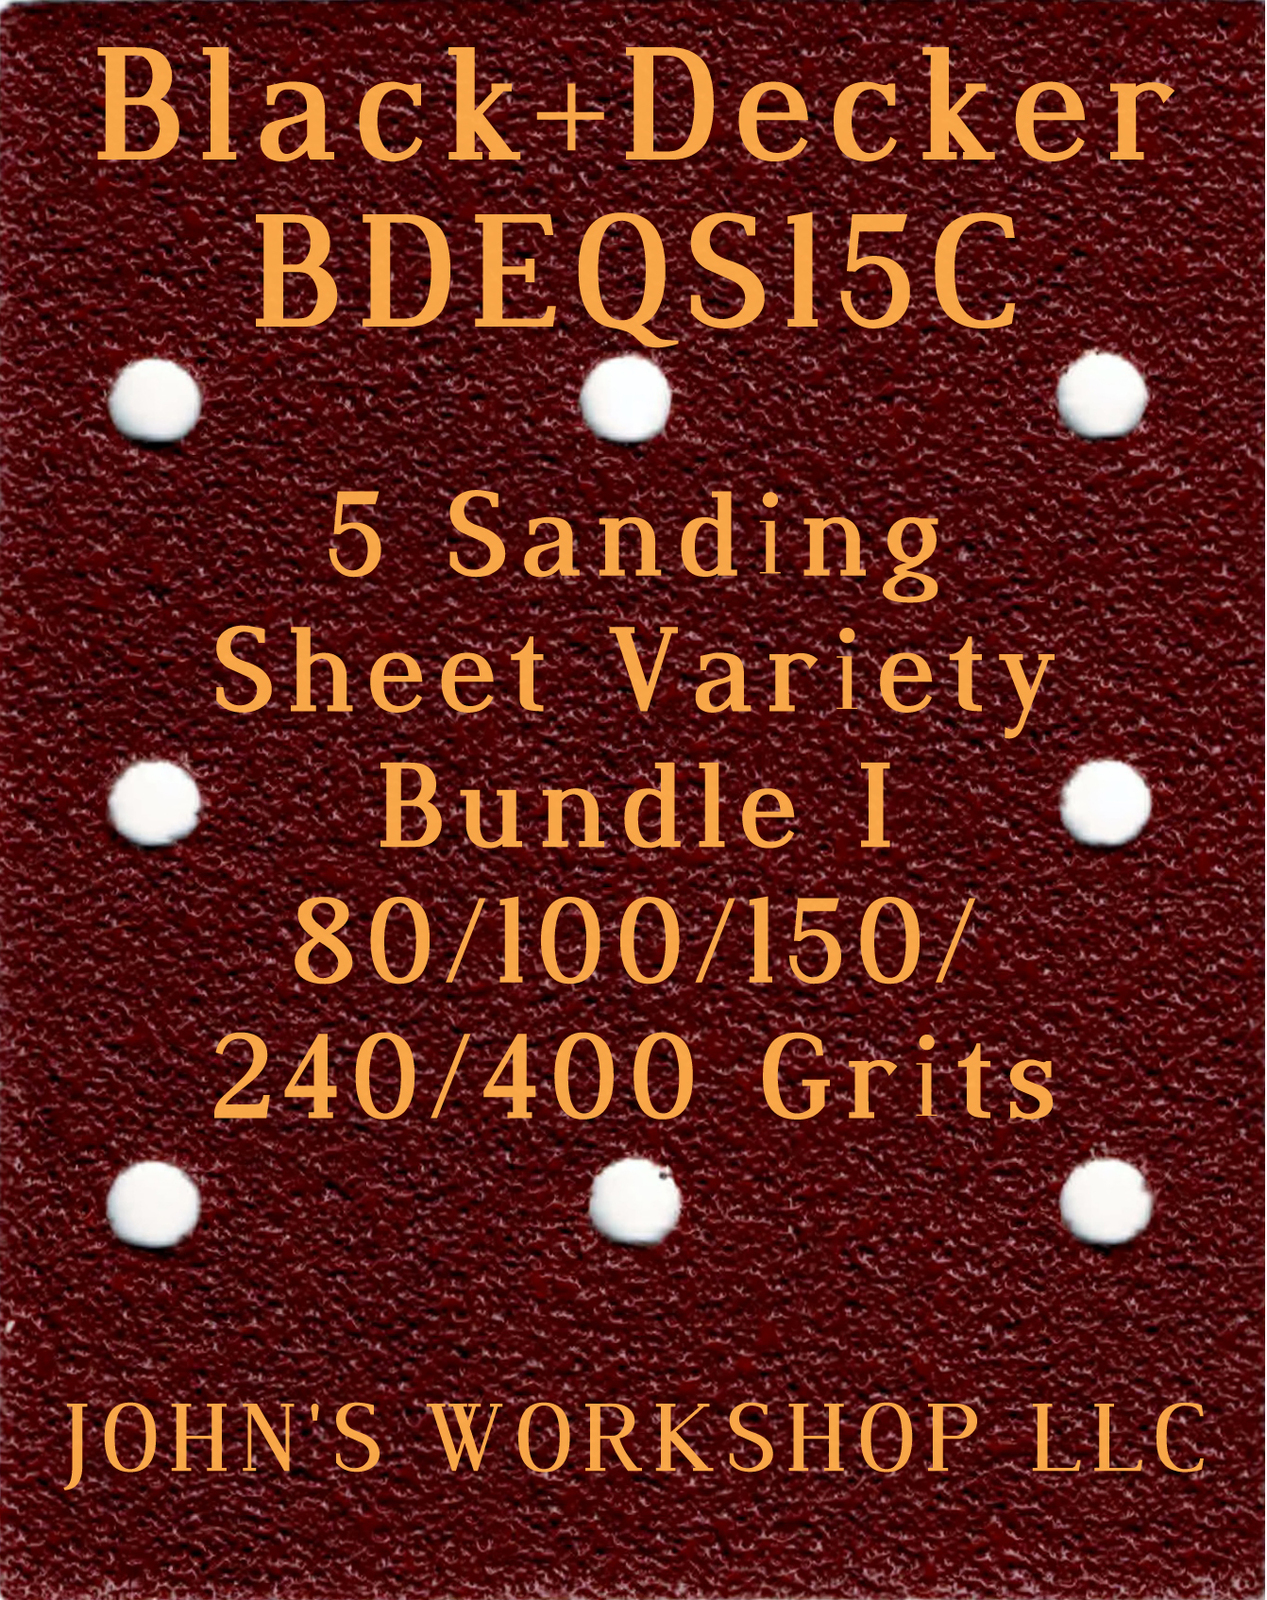 Primary image for Black+Decker BDEQS15C - 80/100/150/240/400 Grits - 5 Sandpaper Variety Bundle I